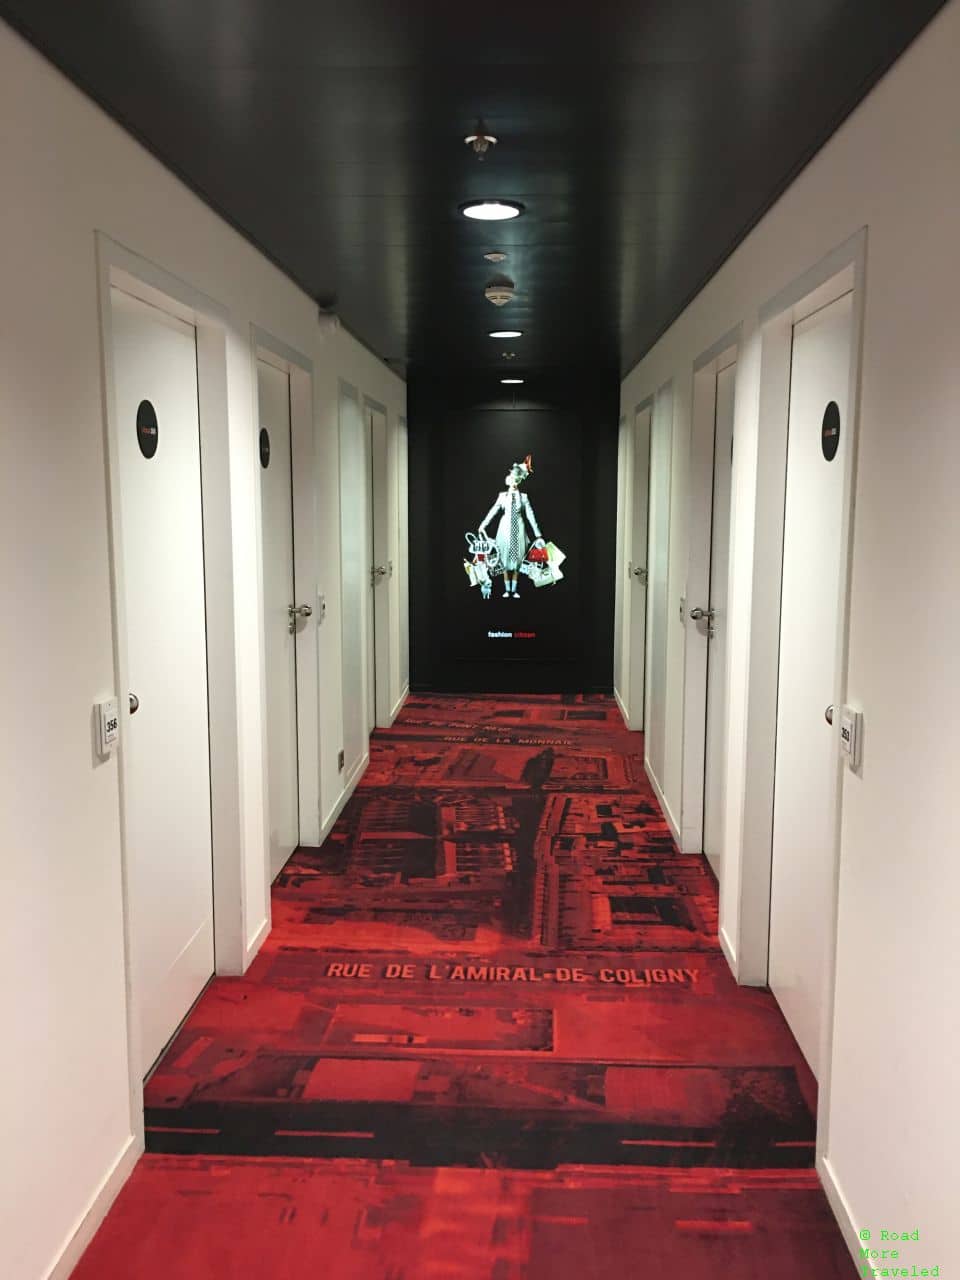 citizenM Paris Charles de Gaulle Hotel - guest room corridor artwork